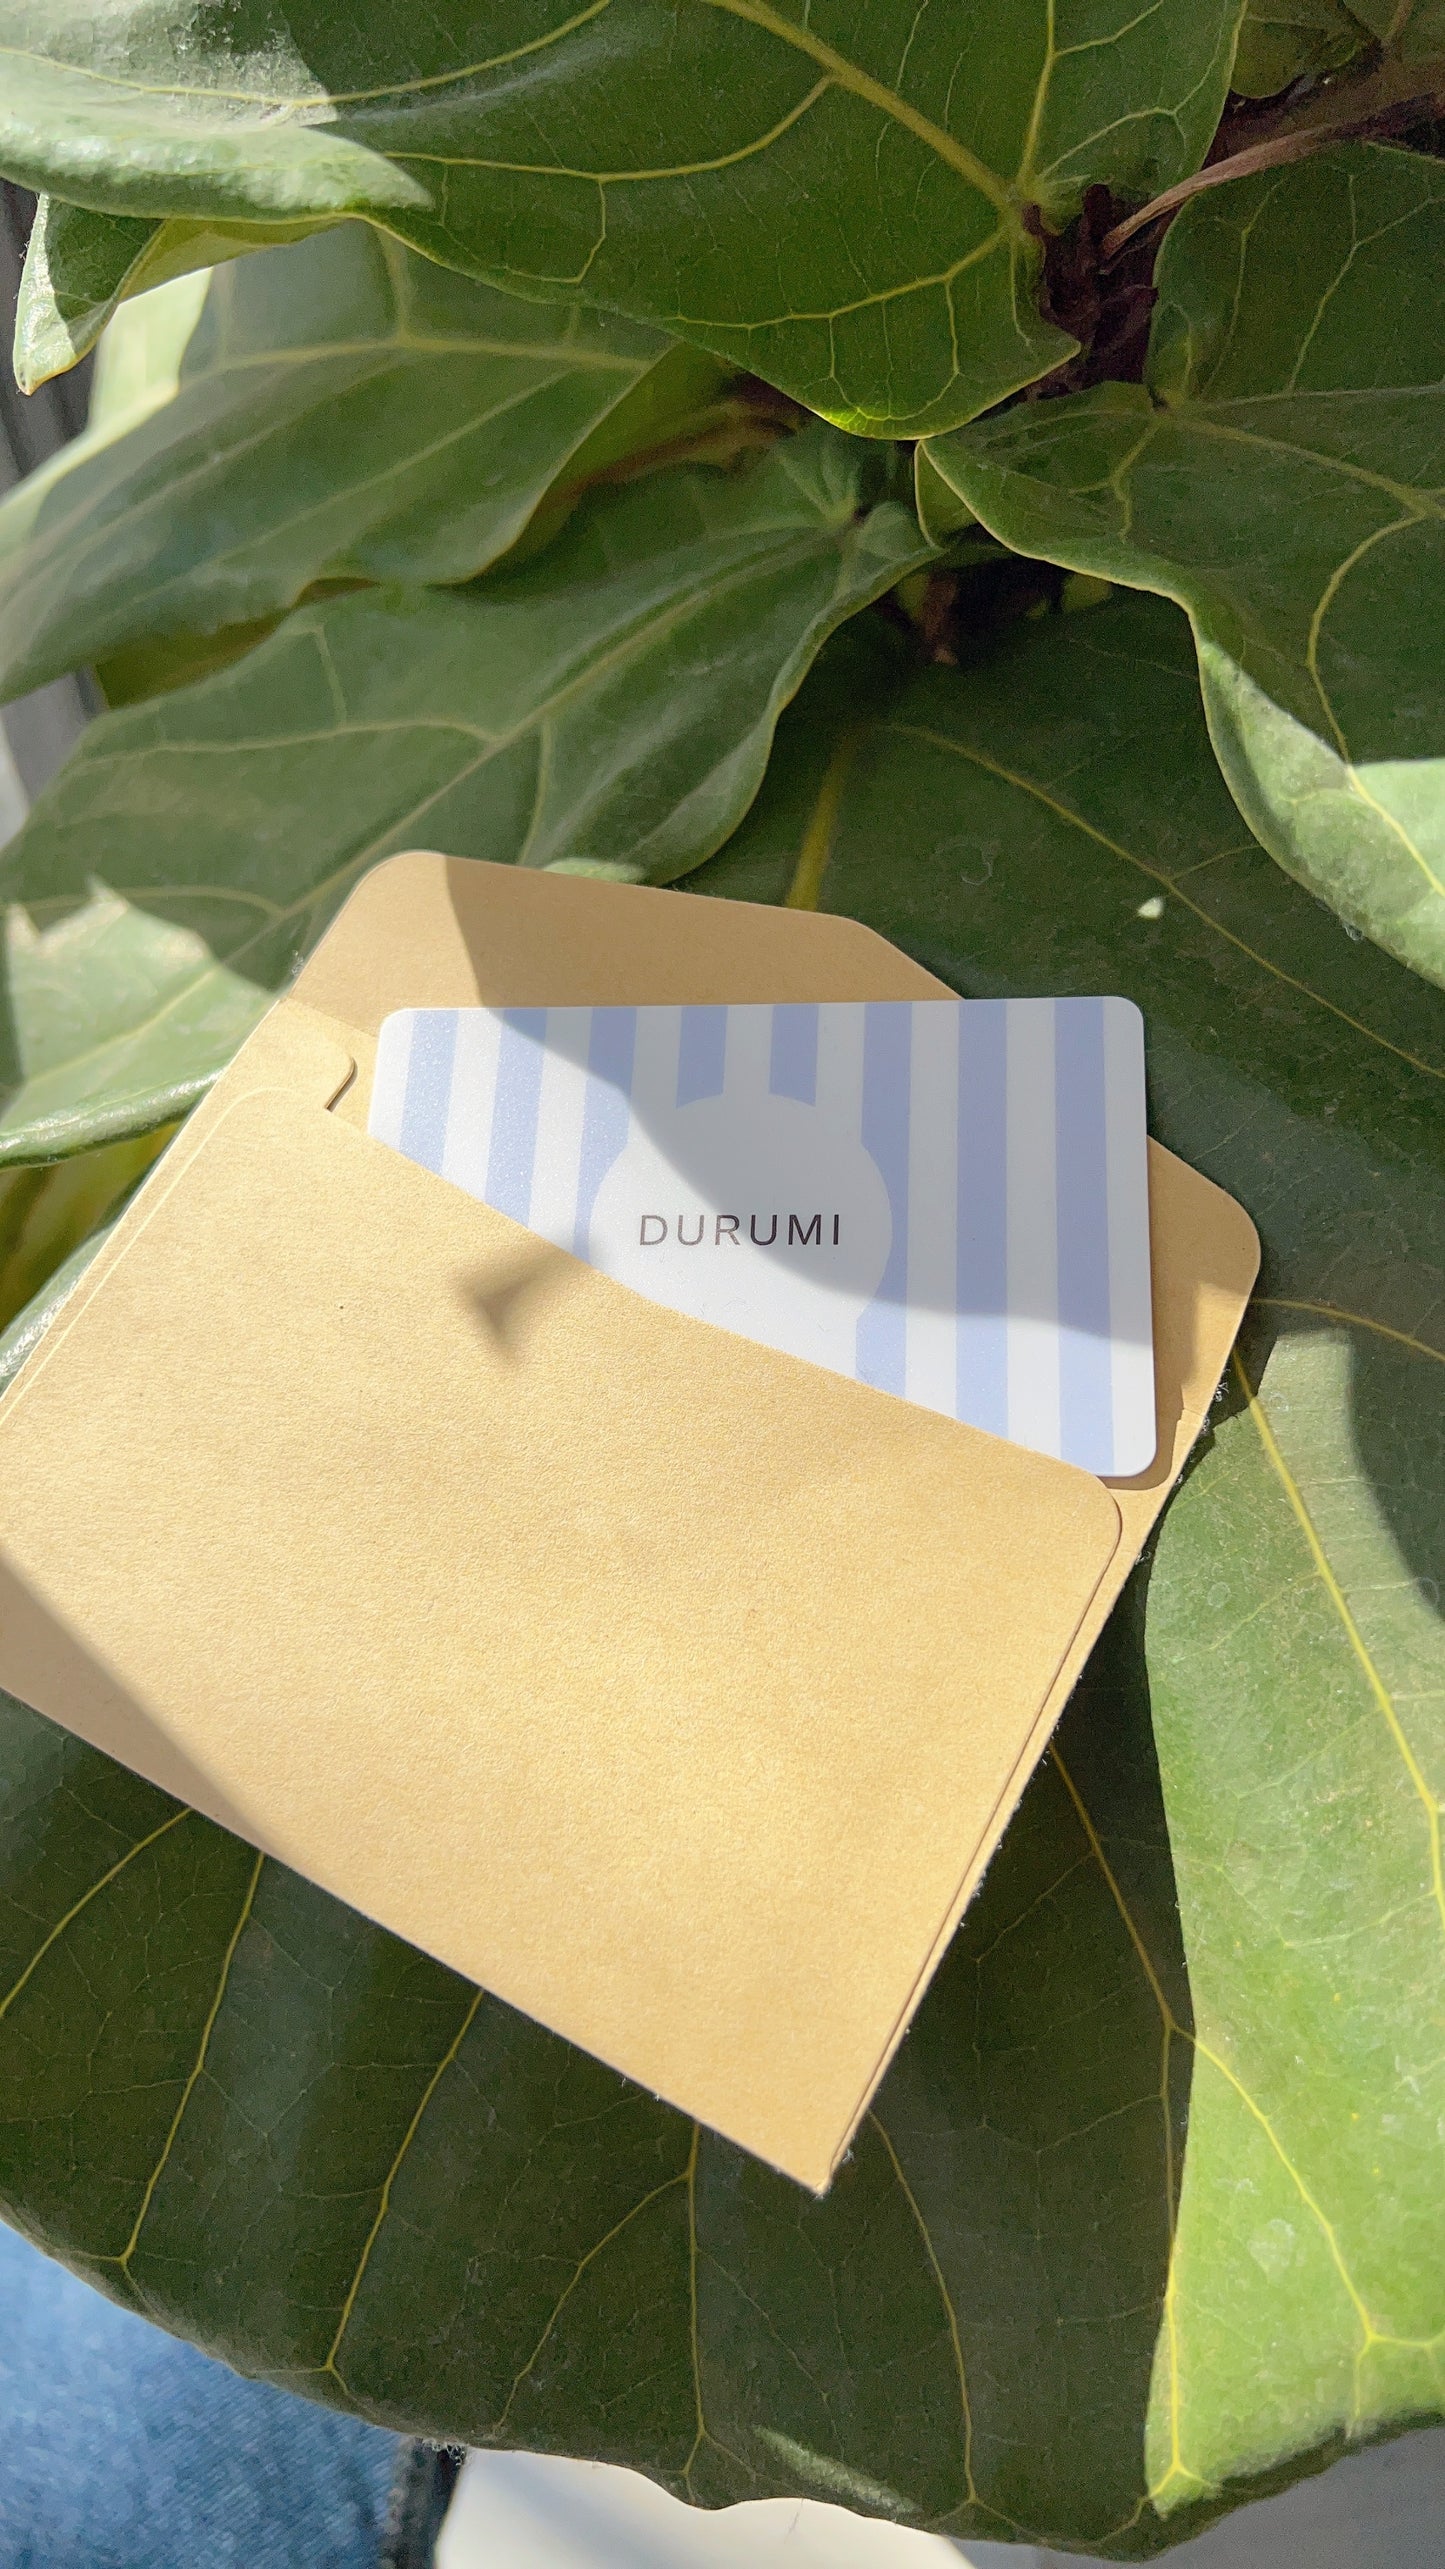 Durumi gift card